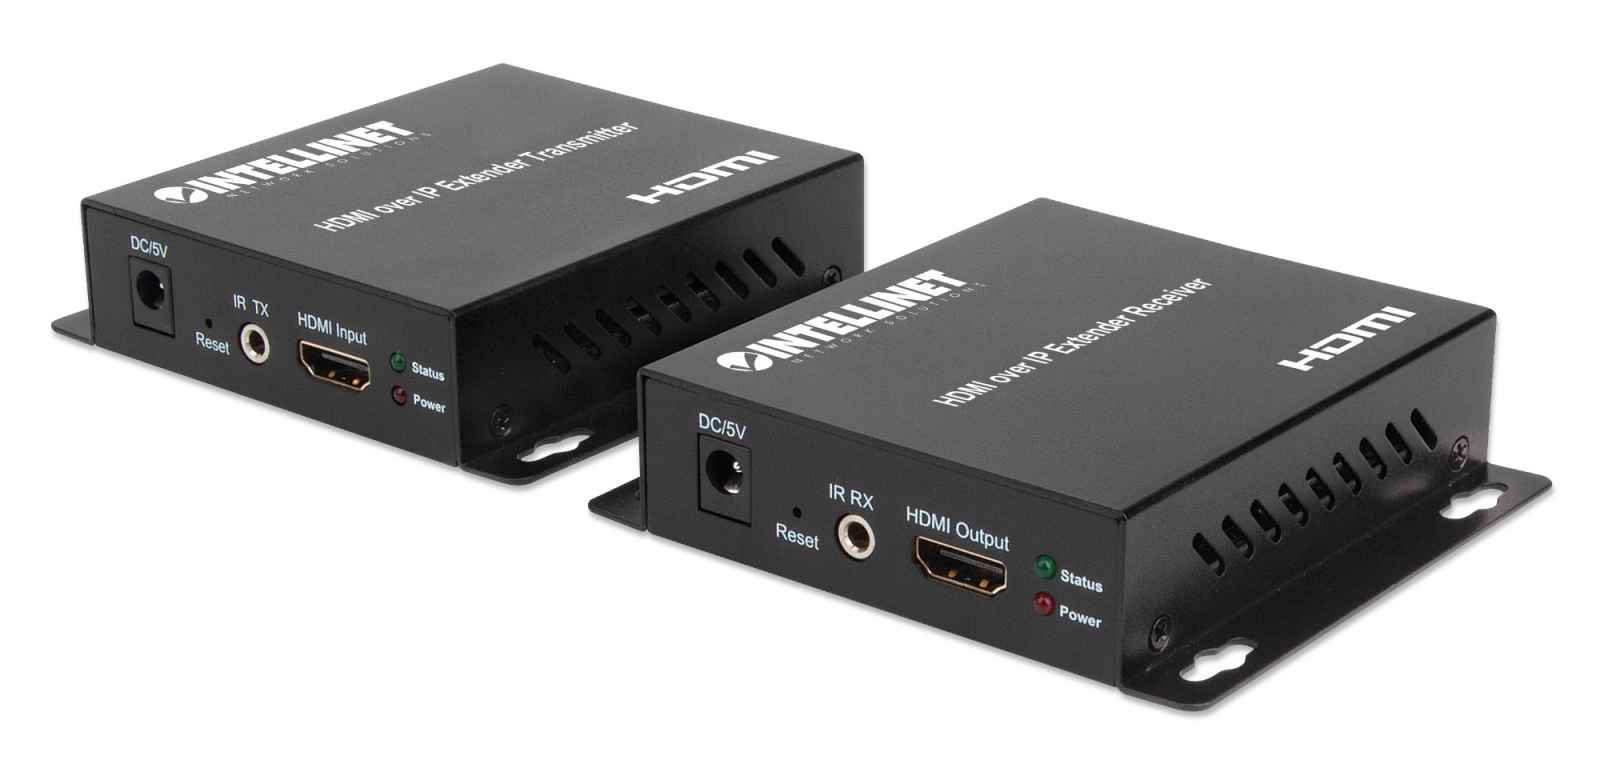 Kit extensor / extender inalámbrico para HDMI - Transmisor hasta